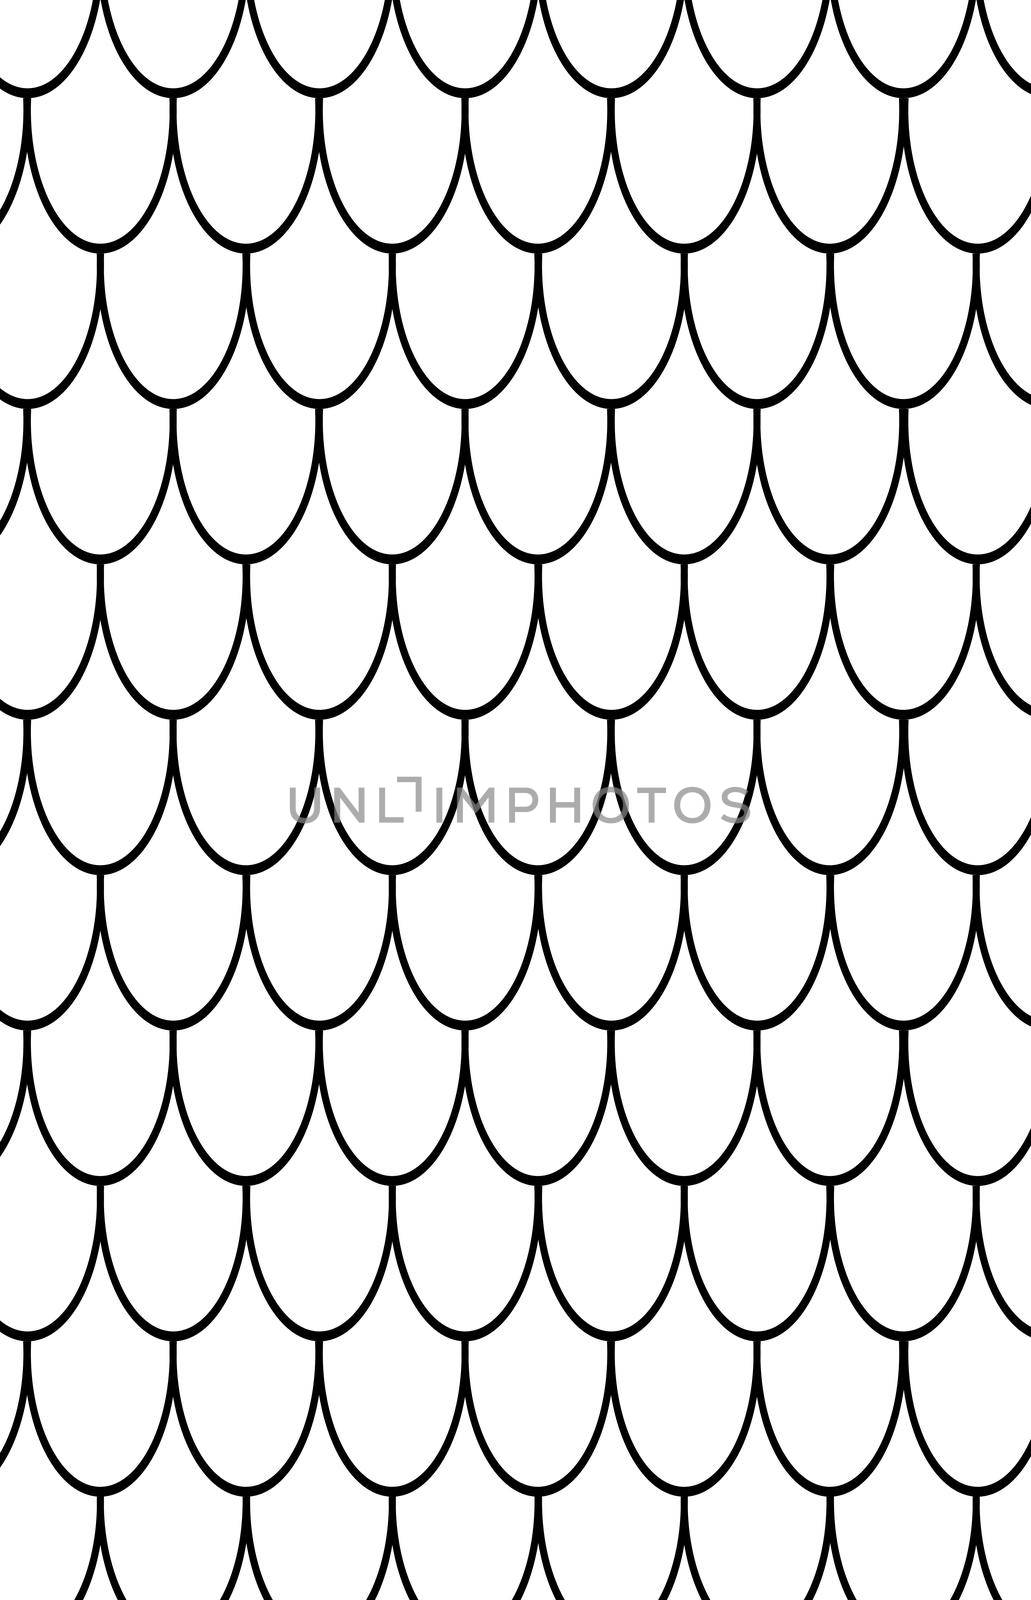 Fish scale motif. Art. Pattern. Background Illustration Black and white